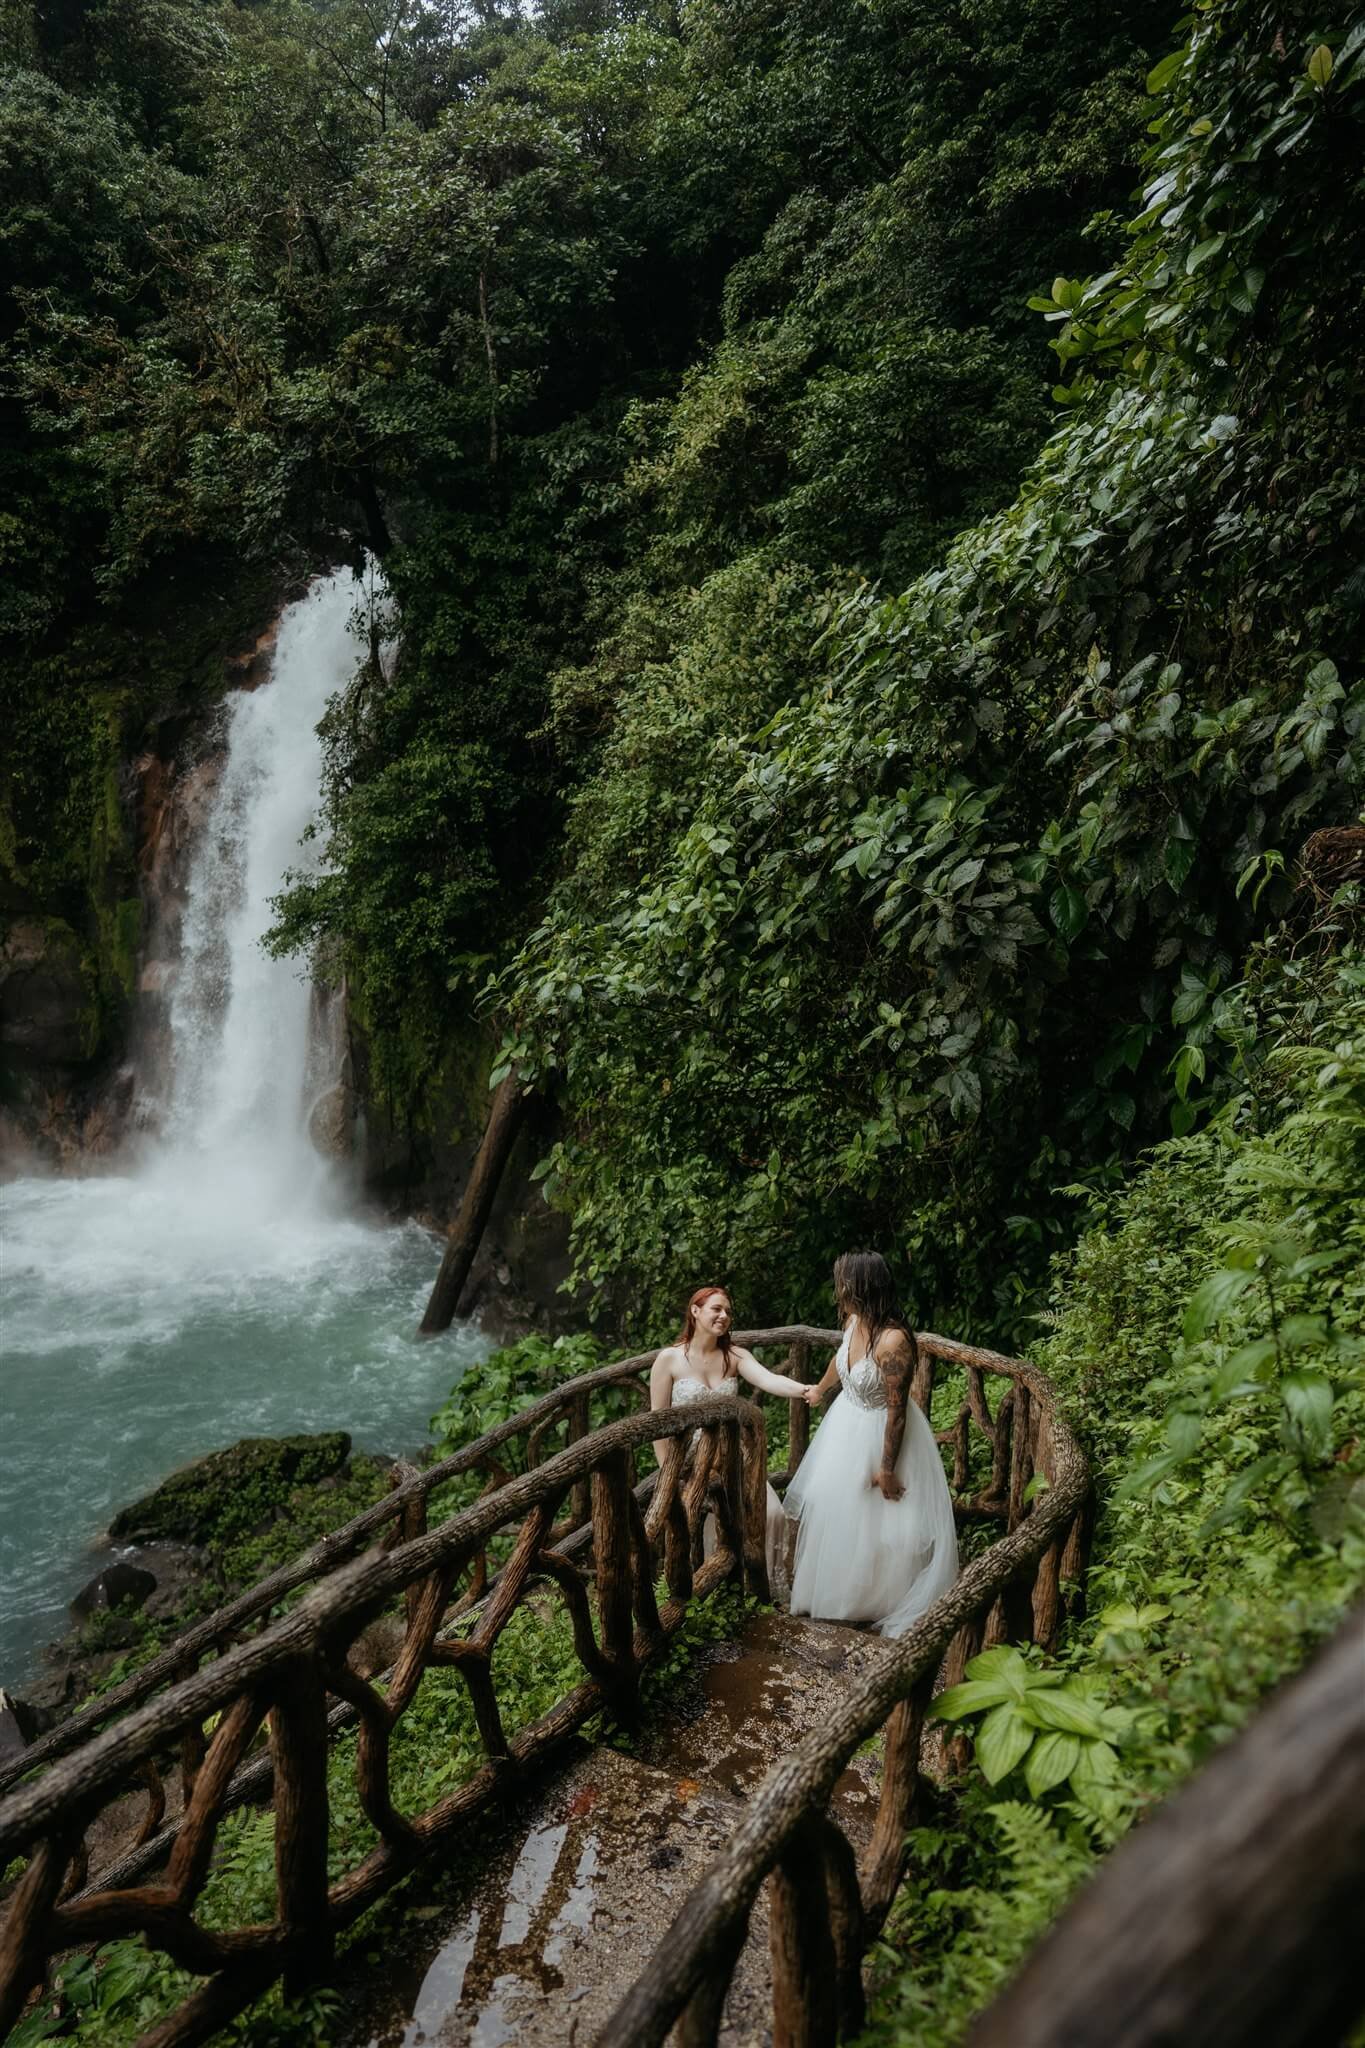 Wedding portraits at destination wedding in Costa Rica